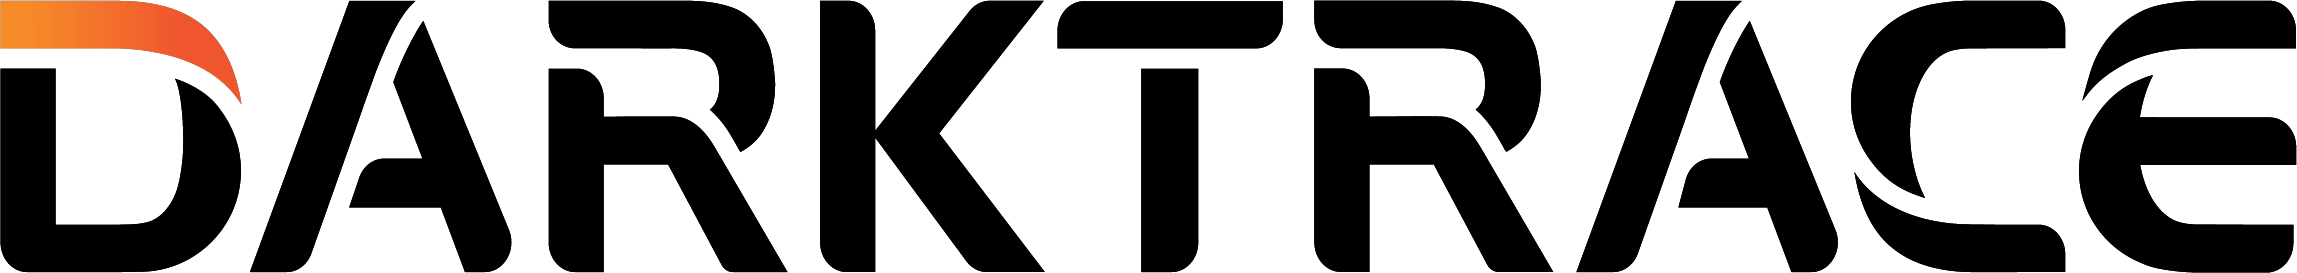 Logo, PNG, black and gradient orange.png